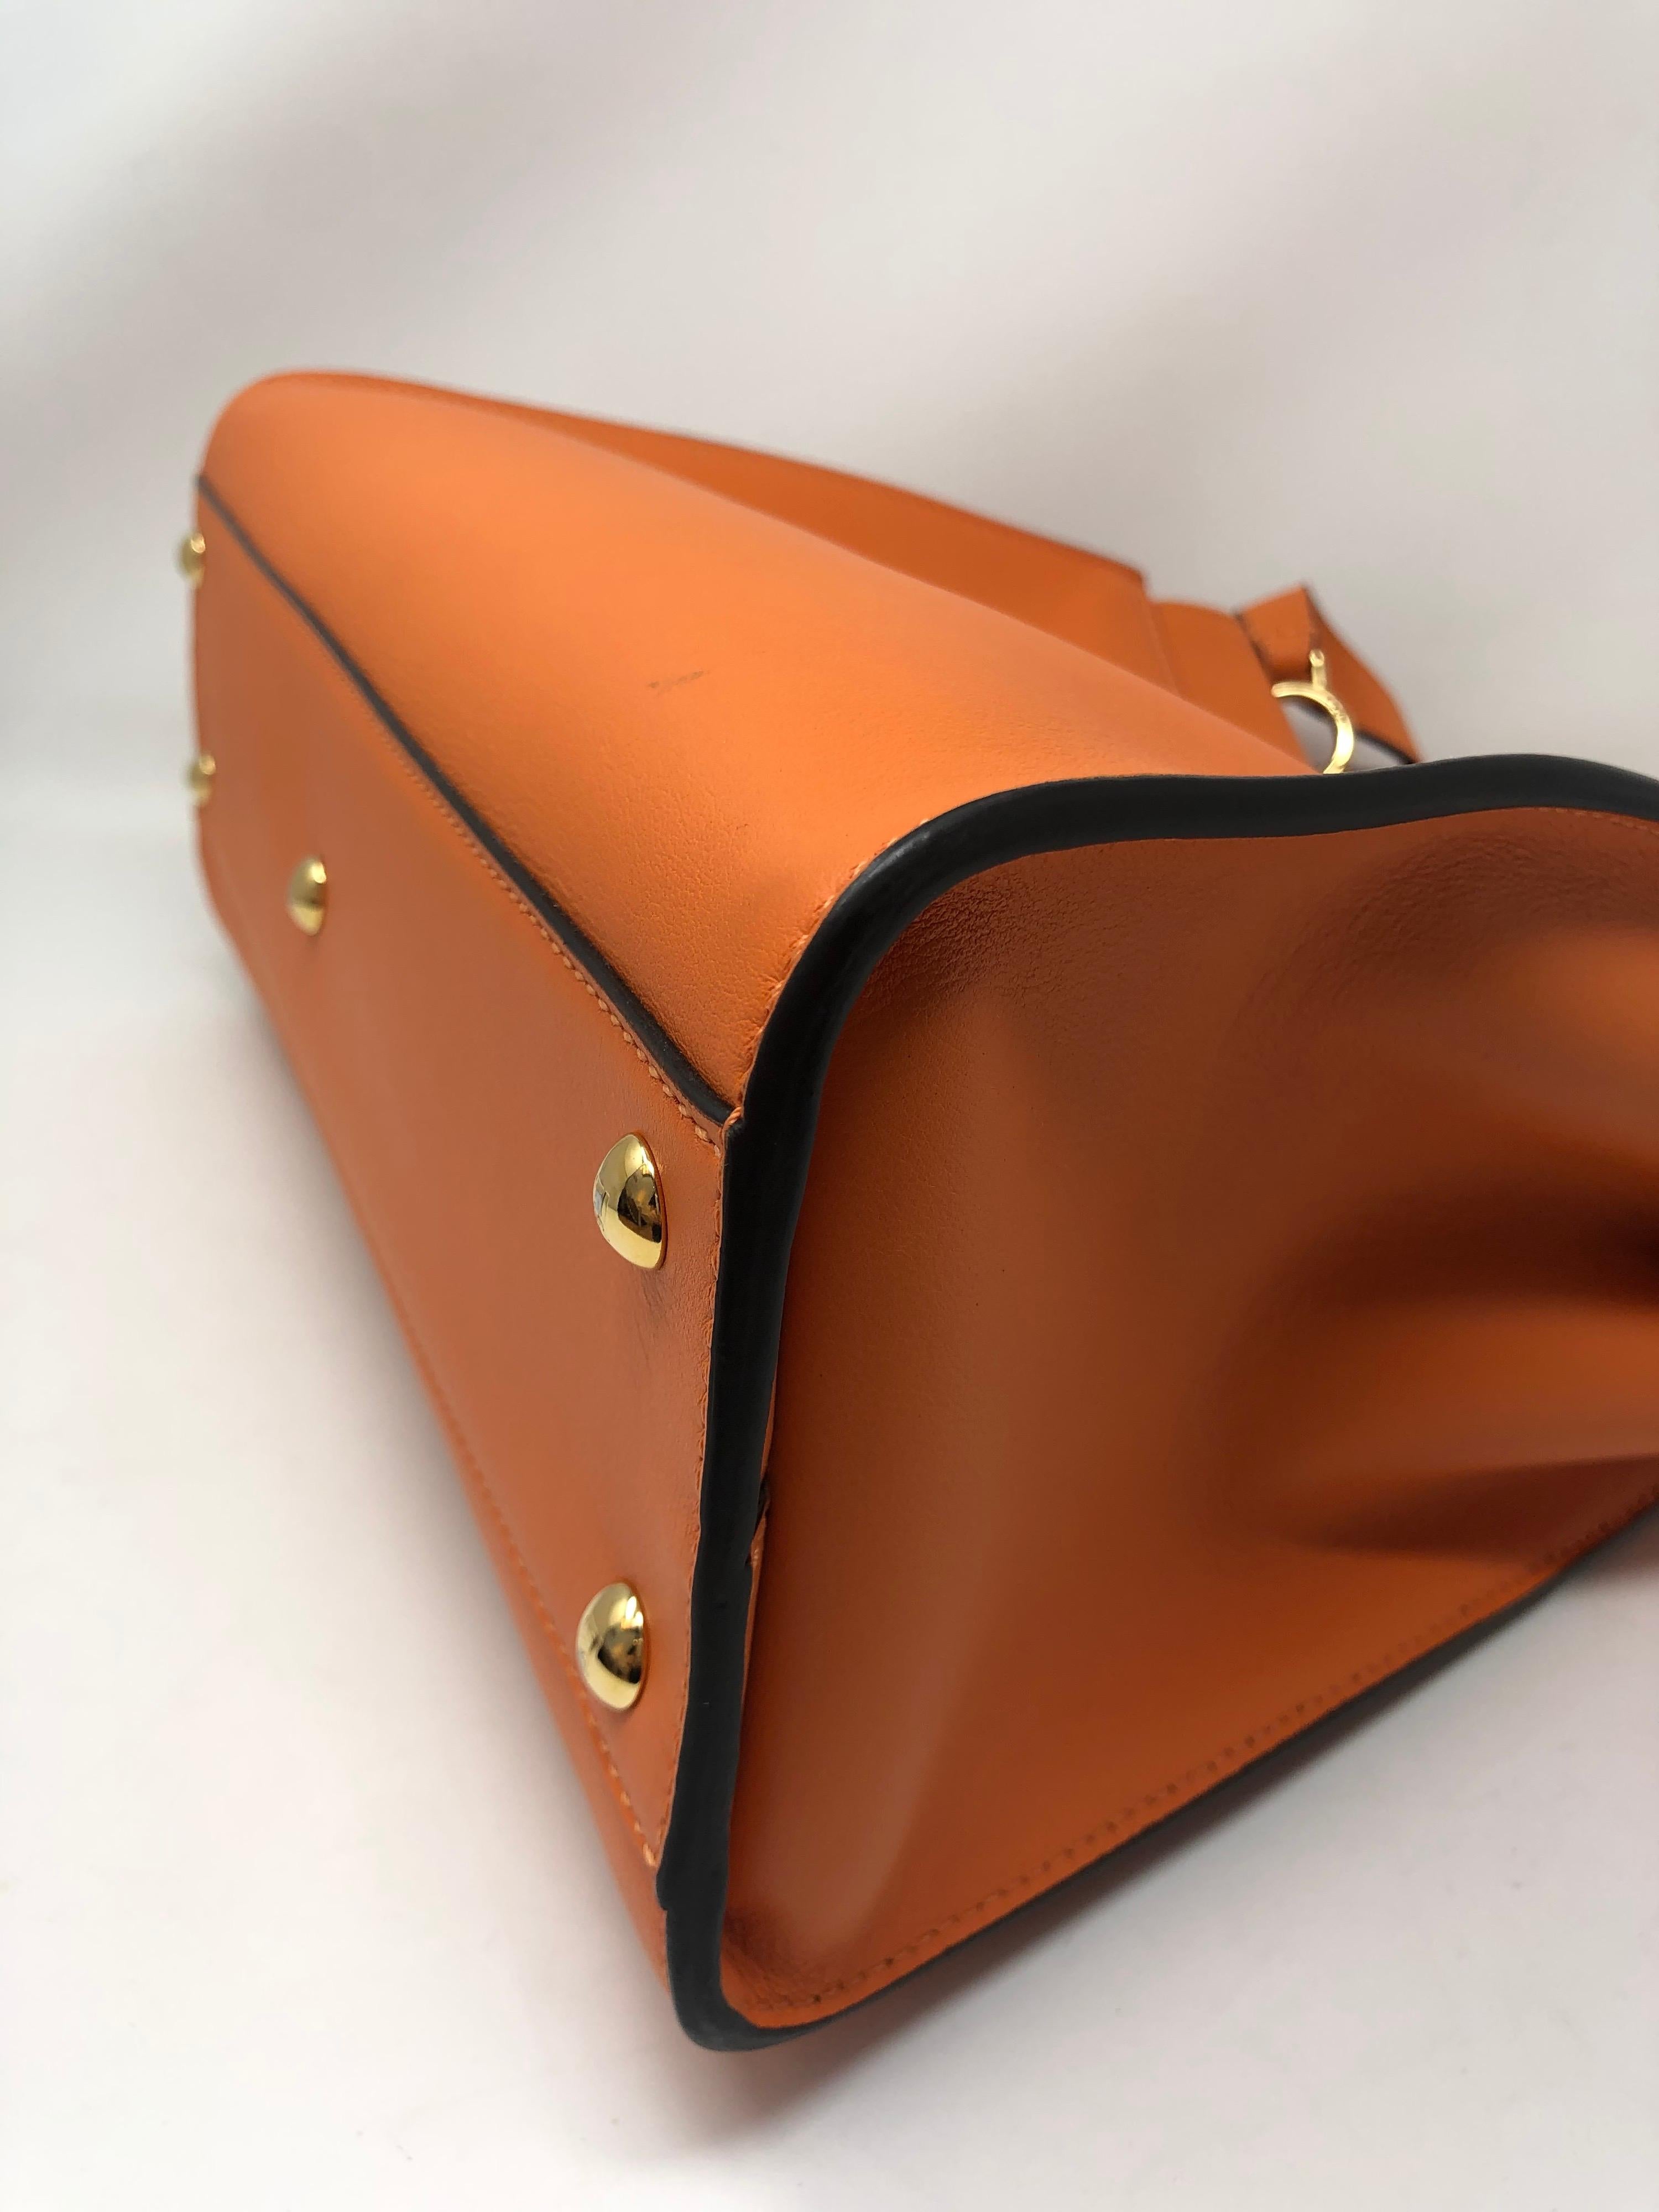 Fendi Peekaboo Orange Leather Bag  6